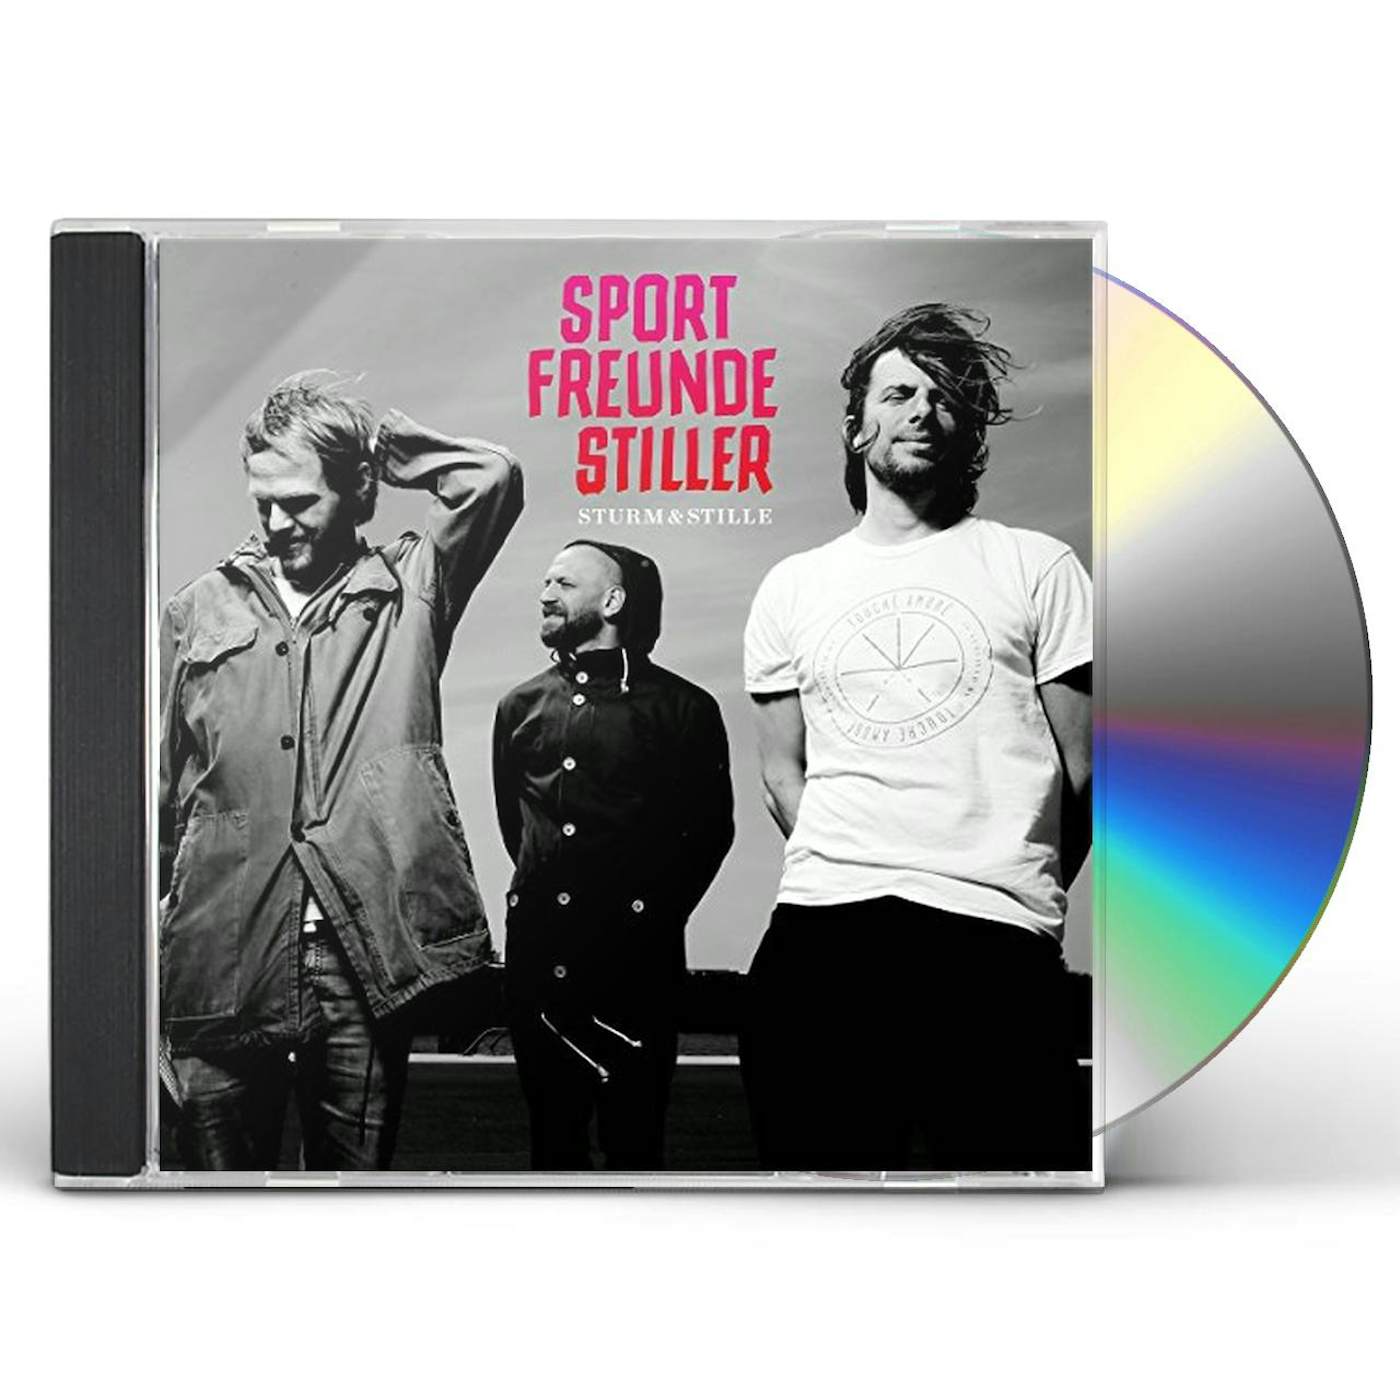 Sportfreunde Stiller STURM & STILLE CD